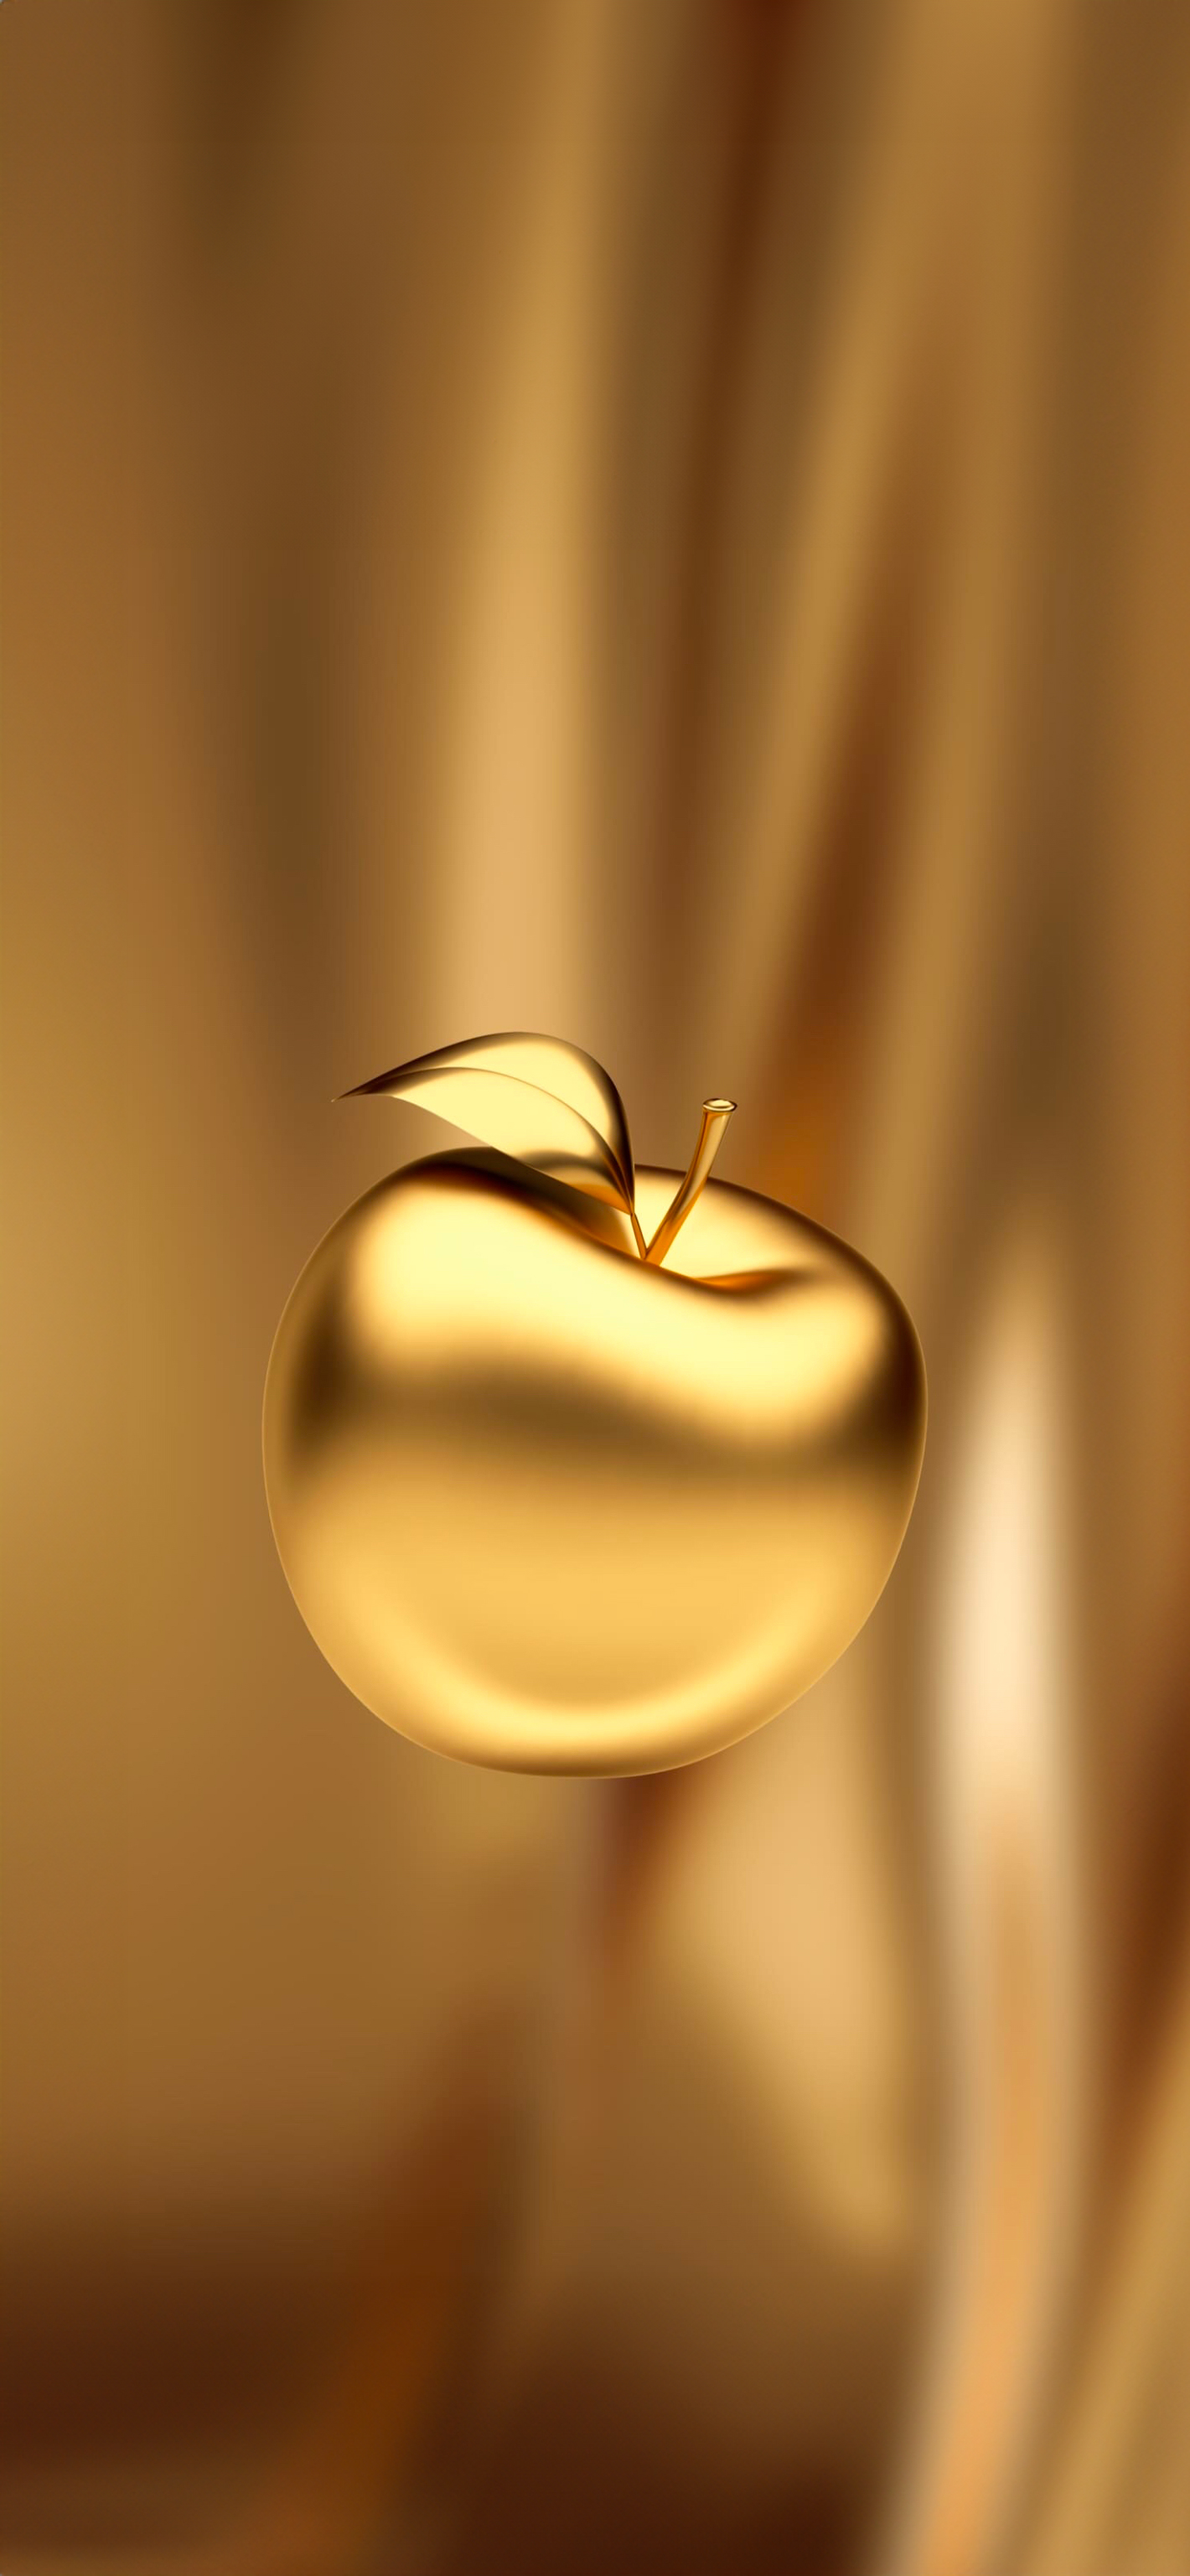 gold apple wallpaper hd